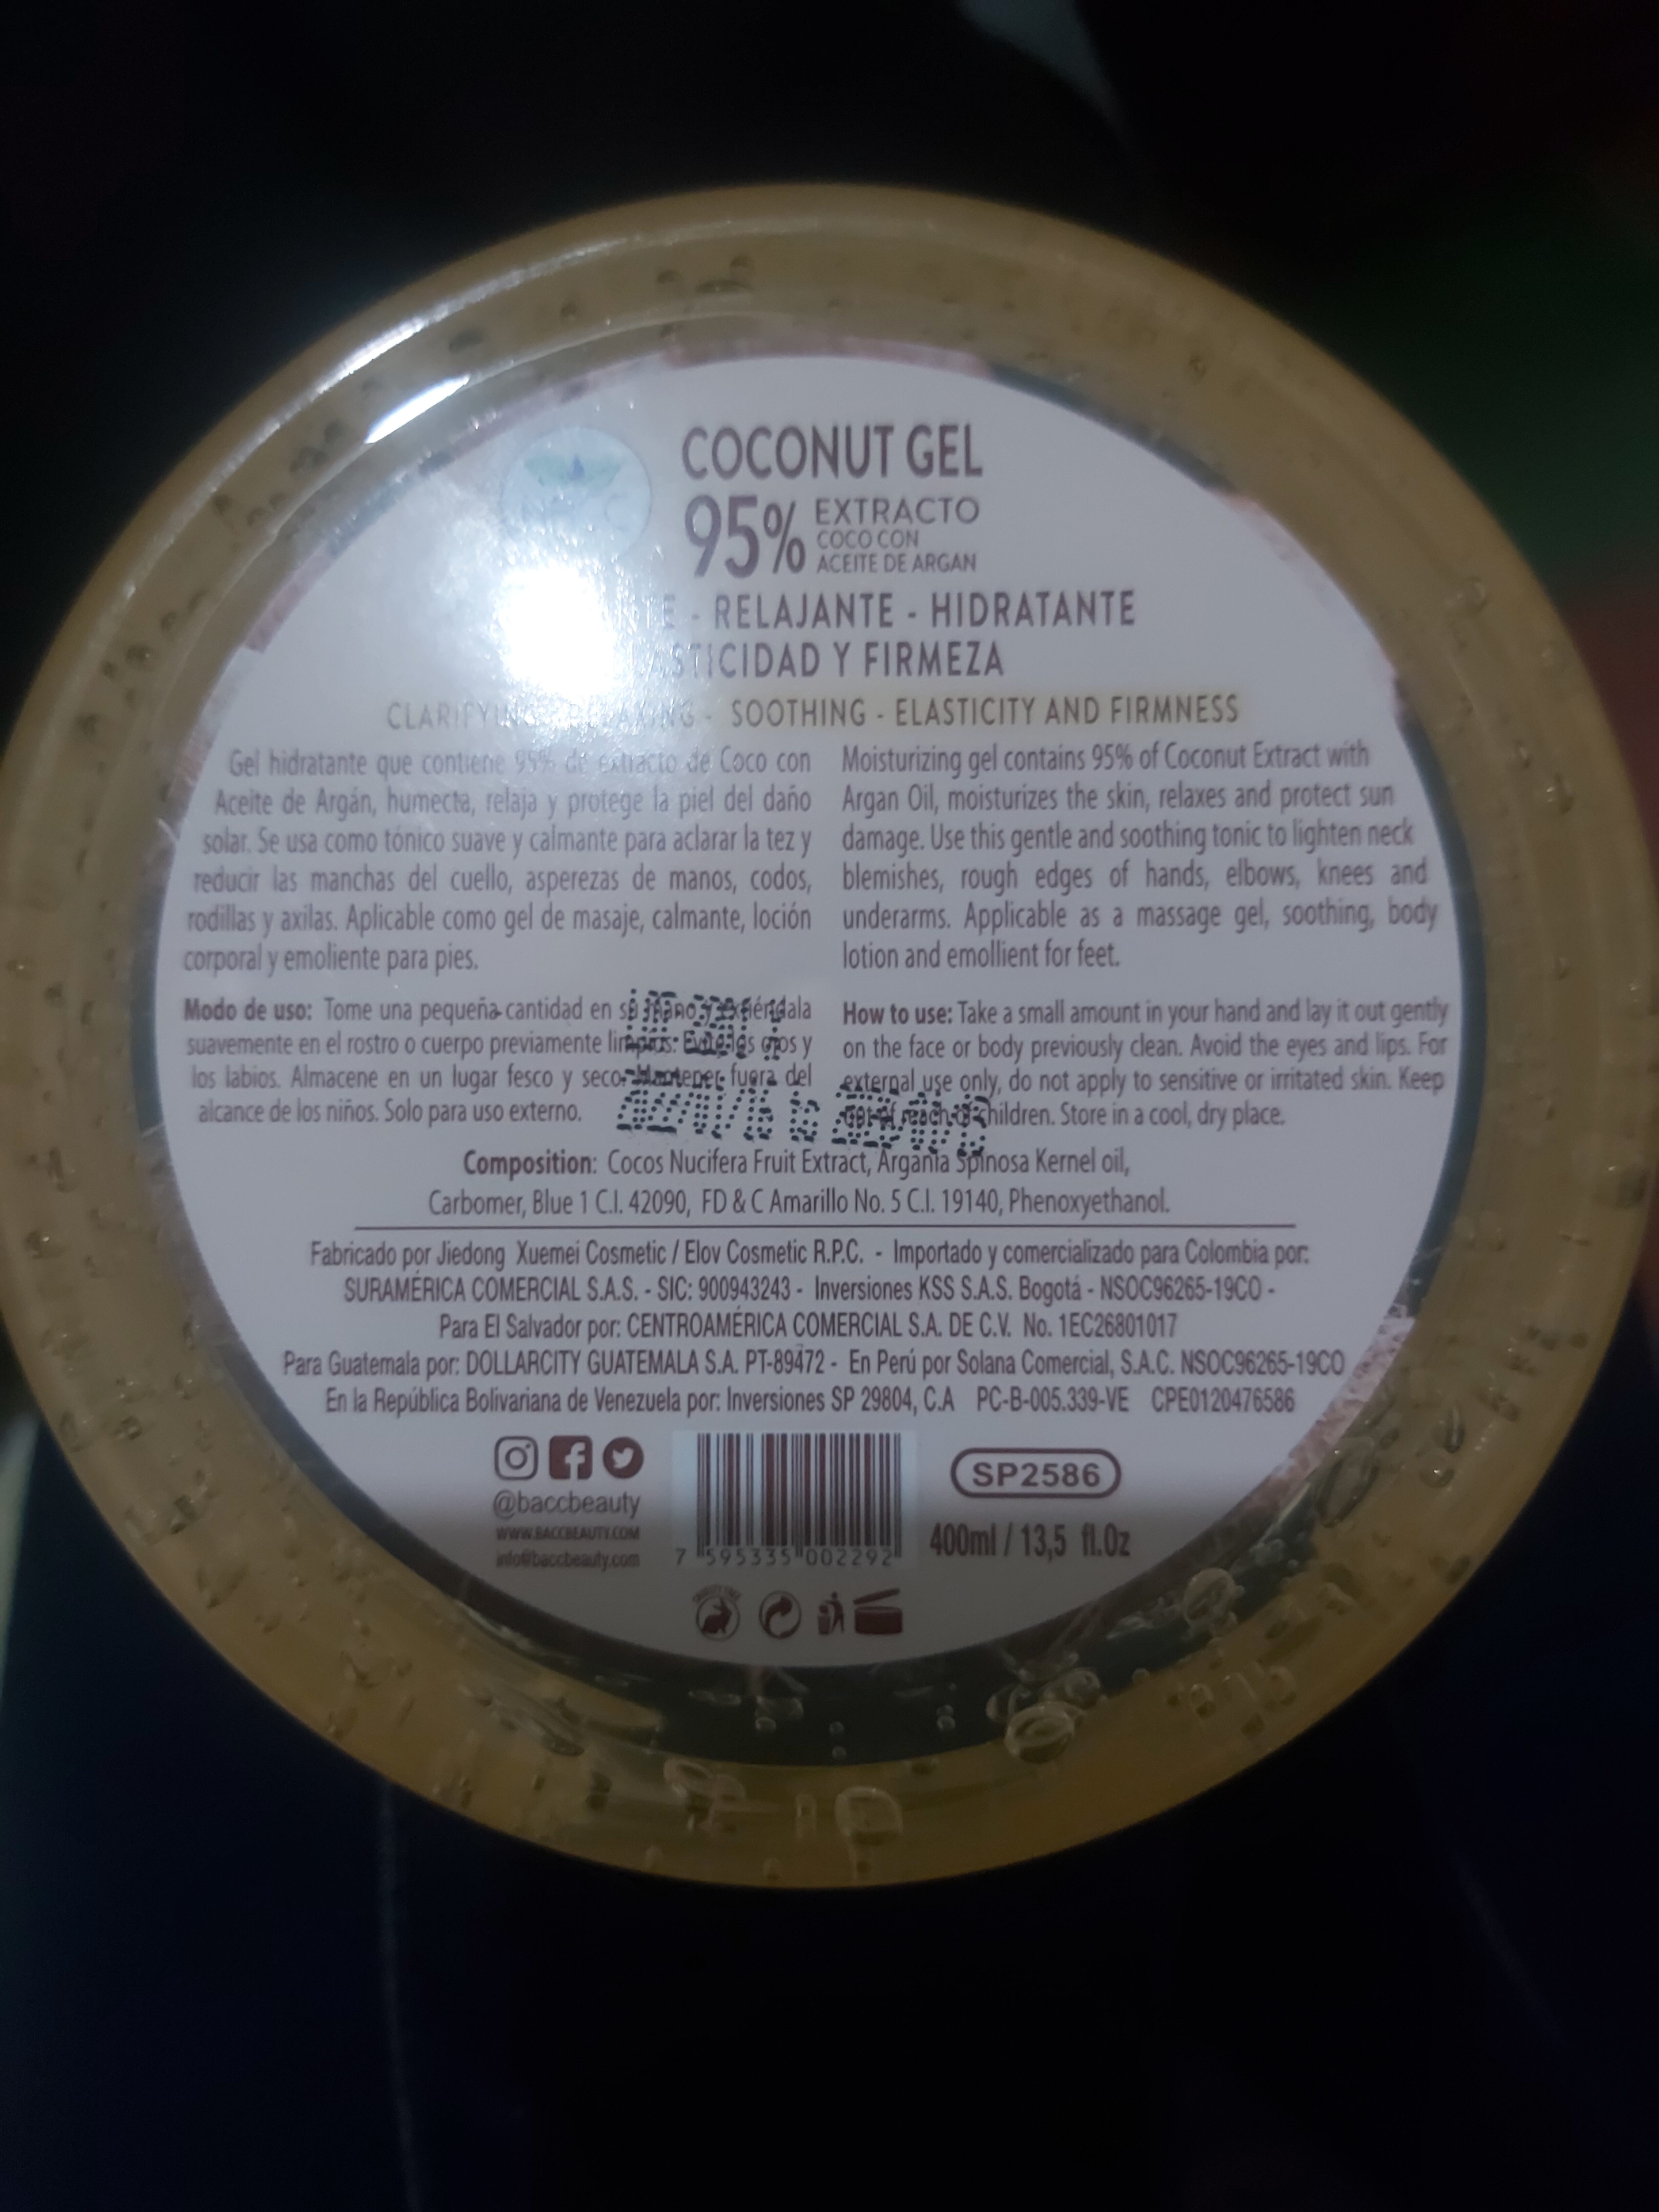 COCONUT BODY GEL - Ingrédients - es